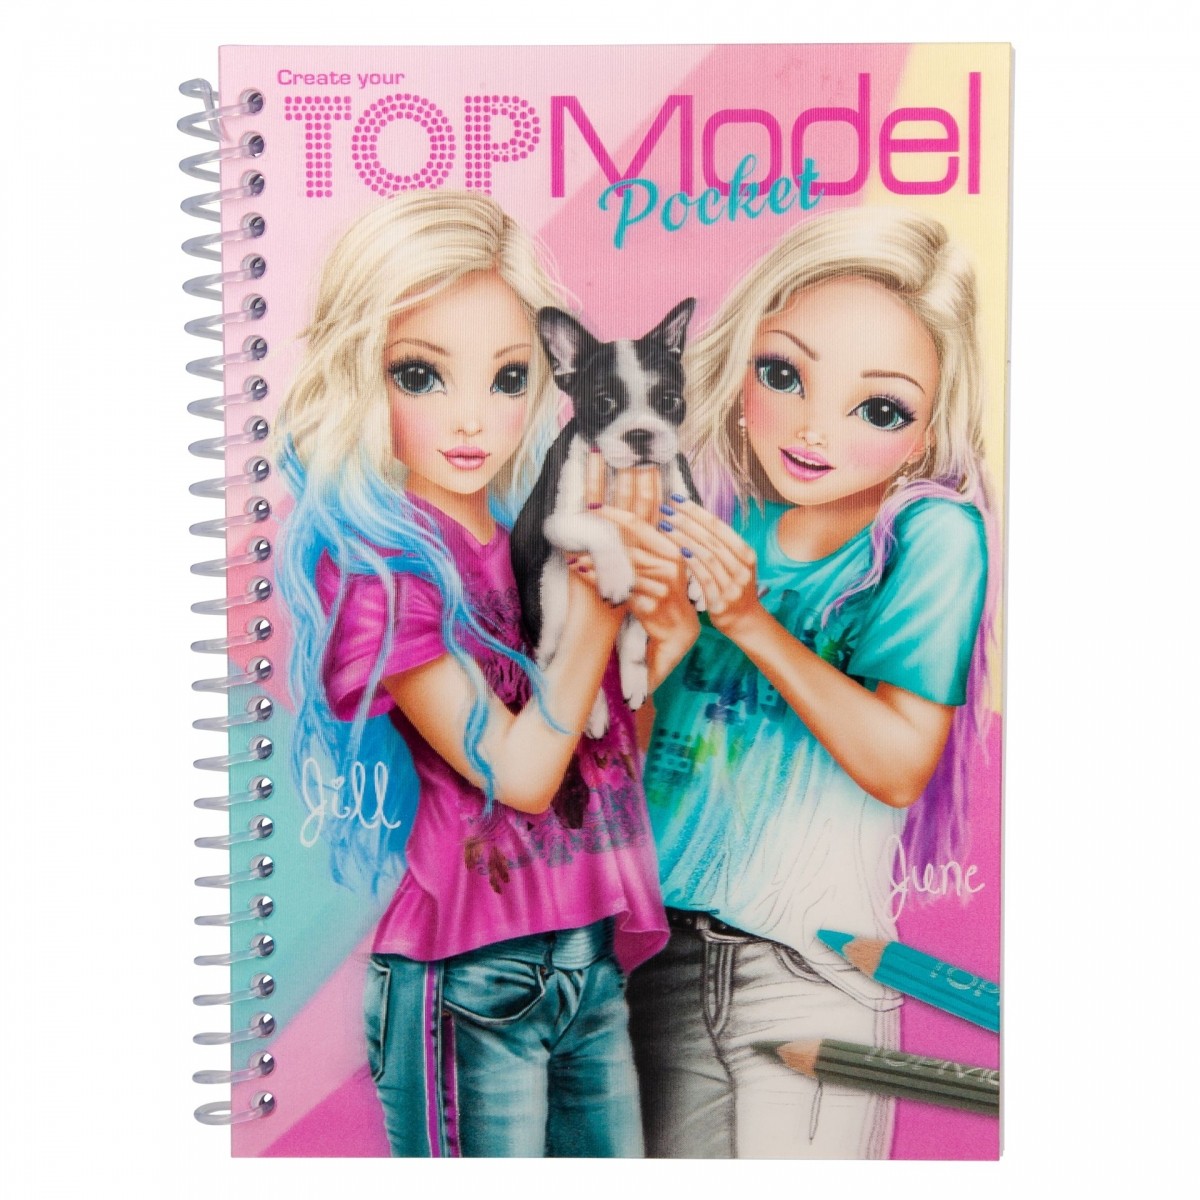 Top Model - Livre de coloriage - Popstar (0411462)